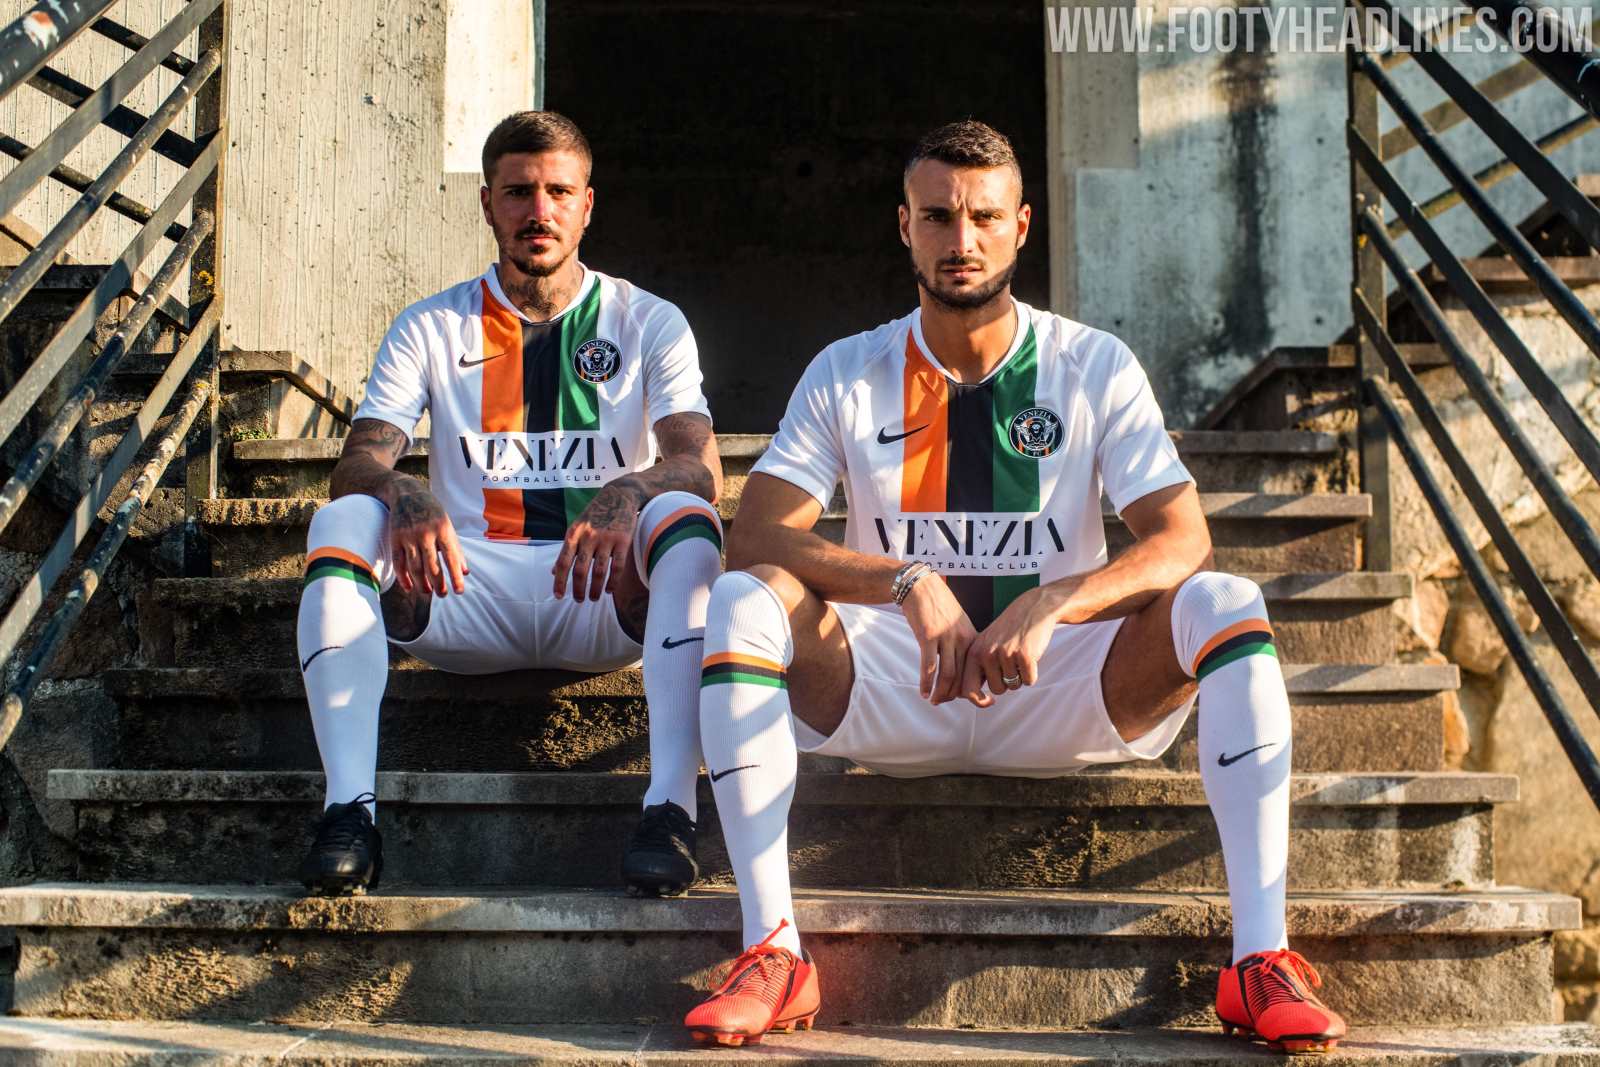 Venezia FC 2022-23 Kappa Away Kit Football Shirt Culture Latest ...